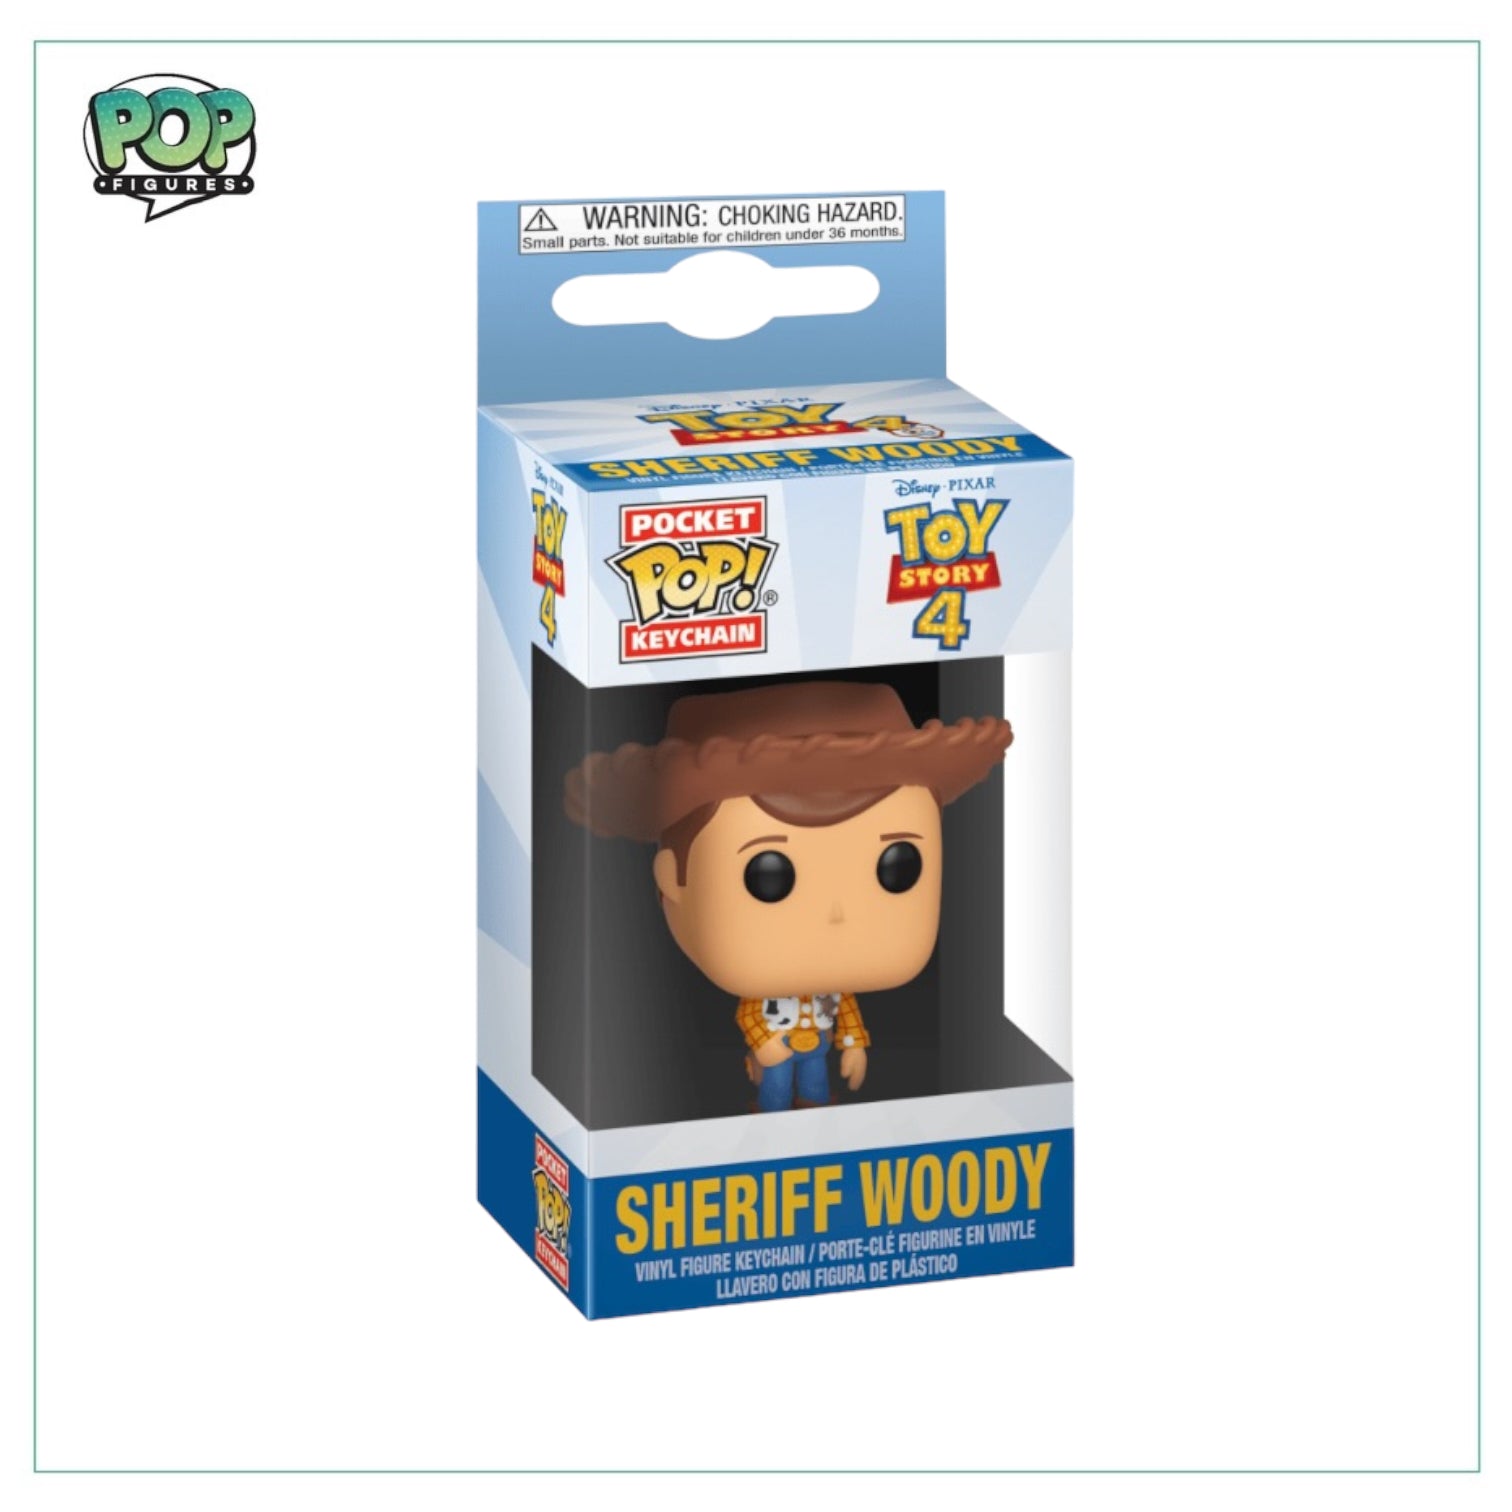 Sheriff Woody Pocket Pop Keychain! - Toy Story 4